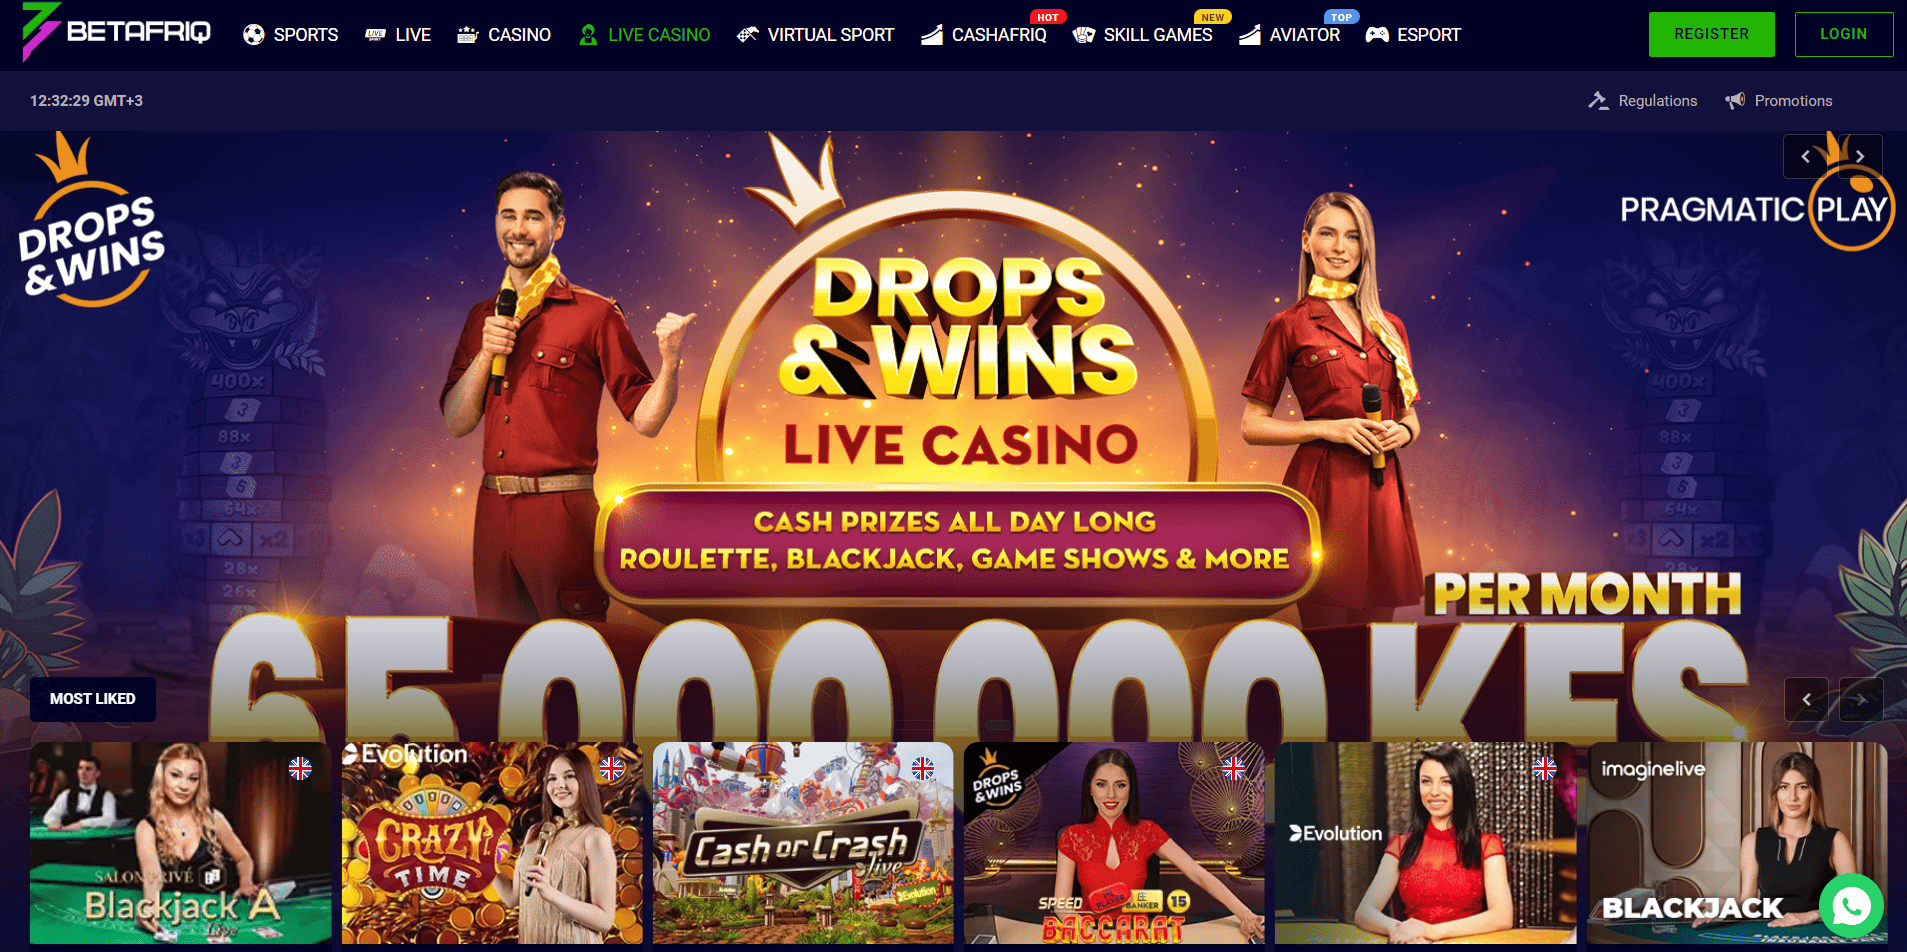 An image of the BetAfriq Online Casino games